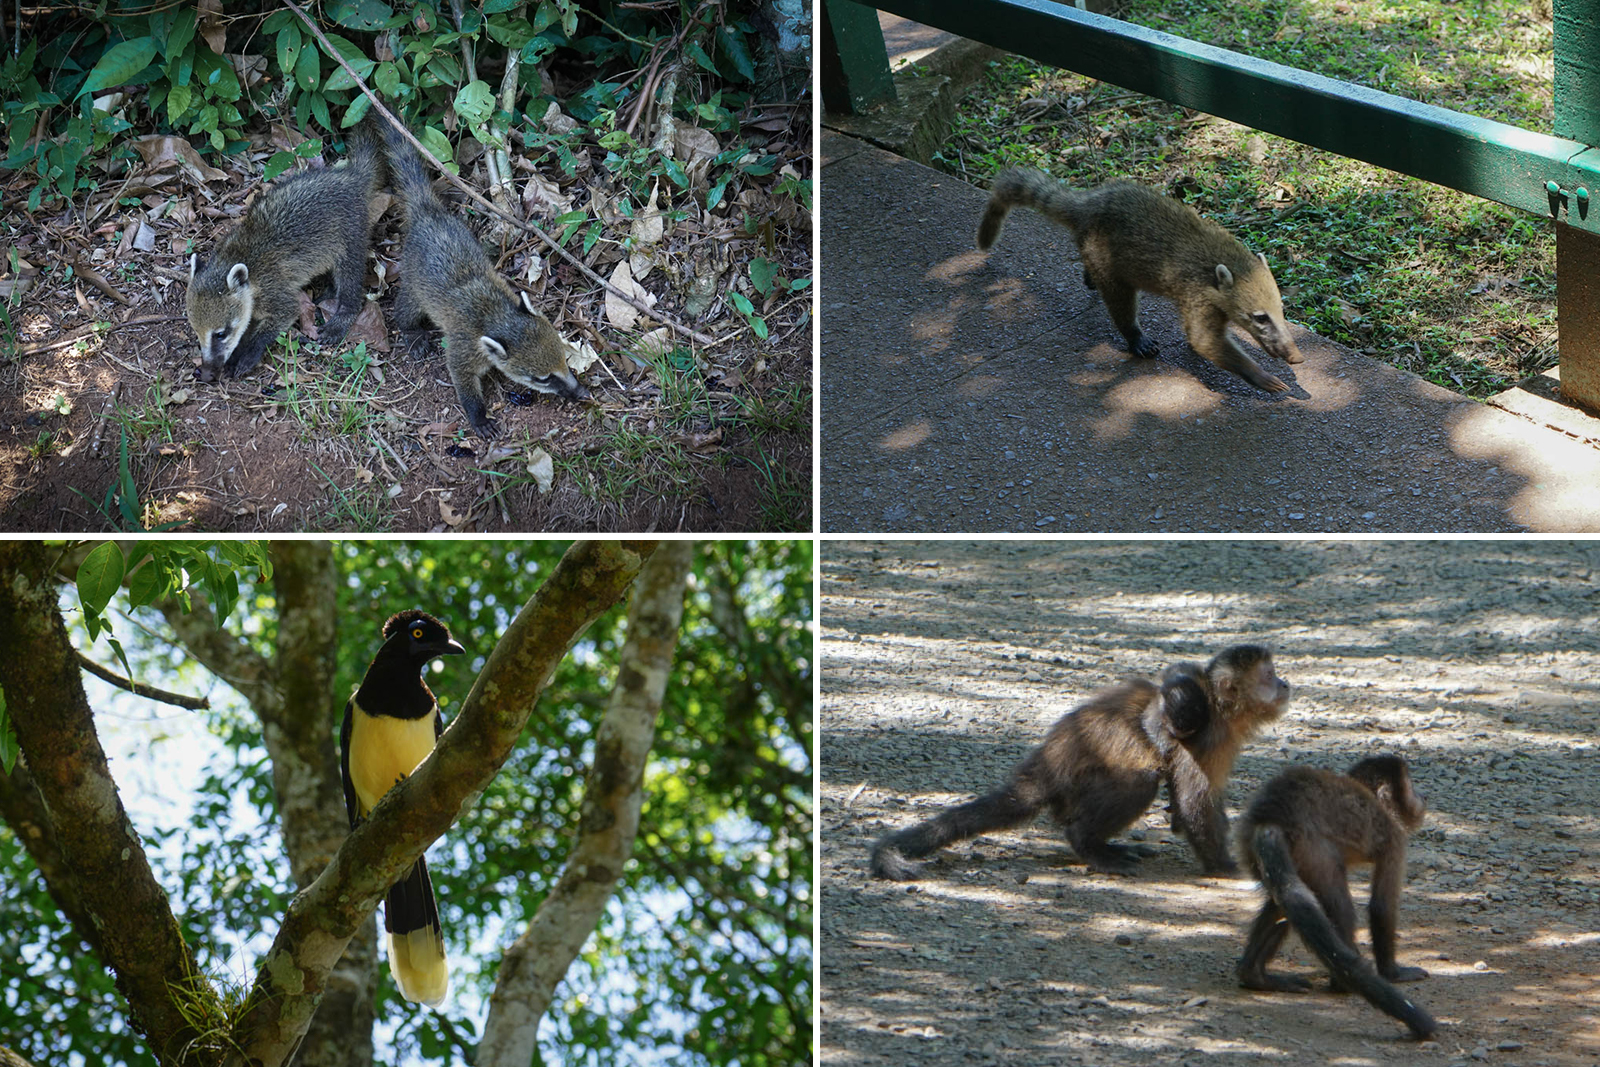 Some of Iguazu's wildlife